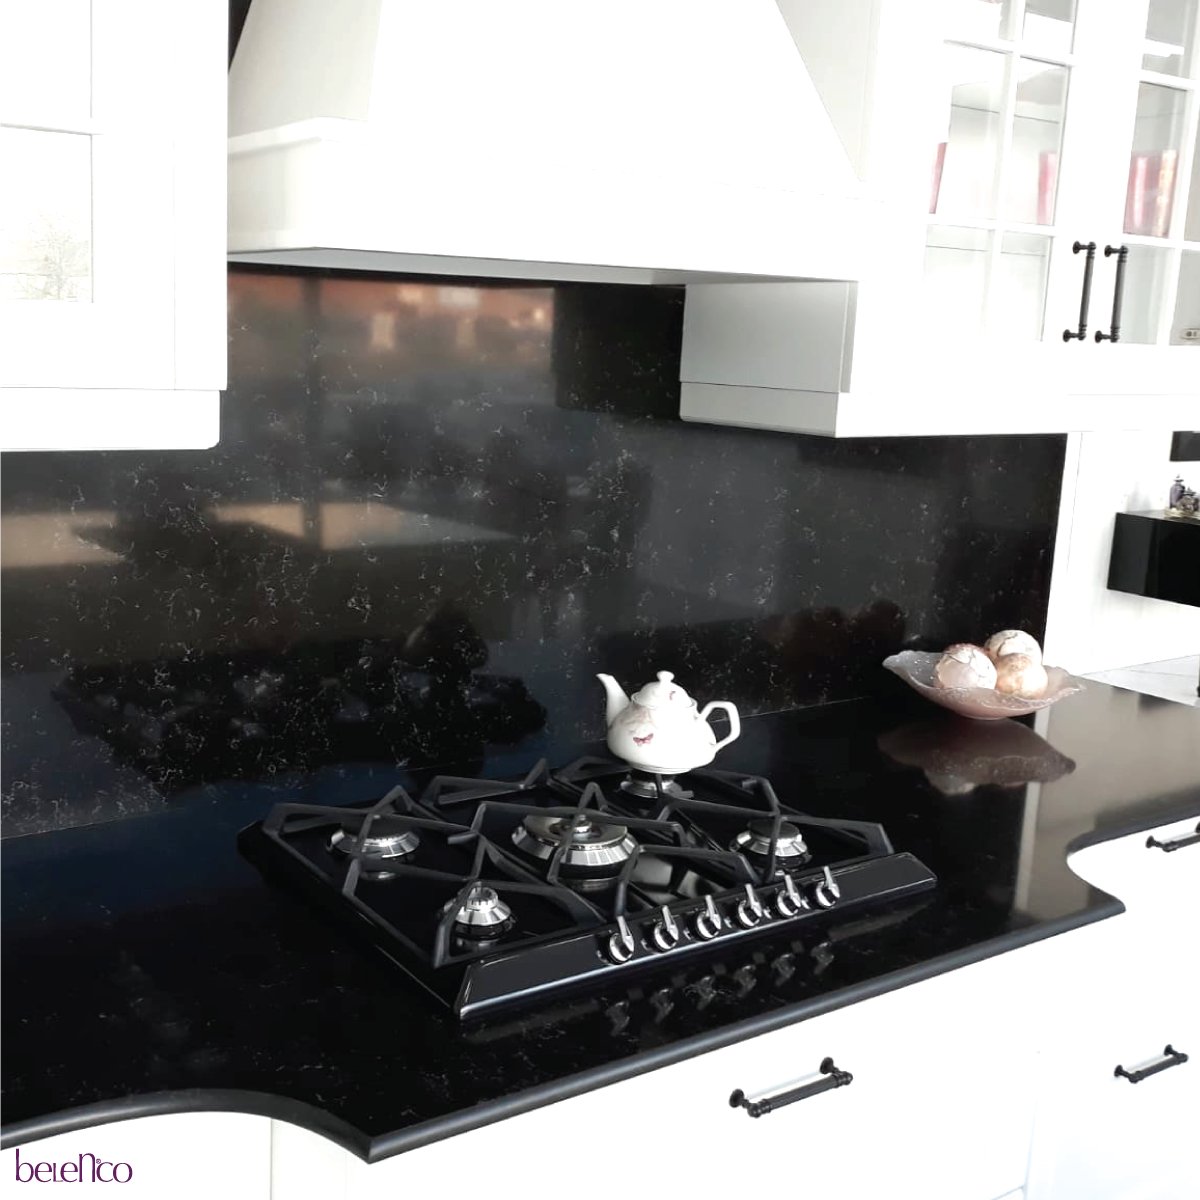 Belenco Quartz Surfaces on X: "Spa Black mutfaklar tarzınızı yansıtır. Spa  Black kitchens show your style. Showroom: Edirne Ertekler Yapı  #8727SpaBlack → https://t.co/w9olZm4yFK https://t.co/Qi43CPOqHd" / X